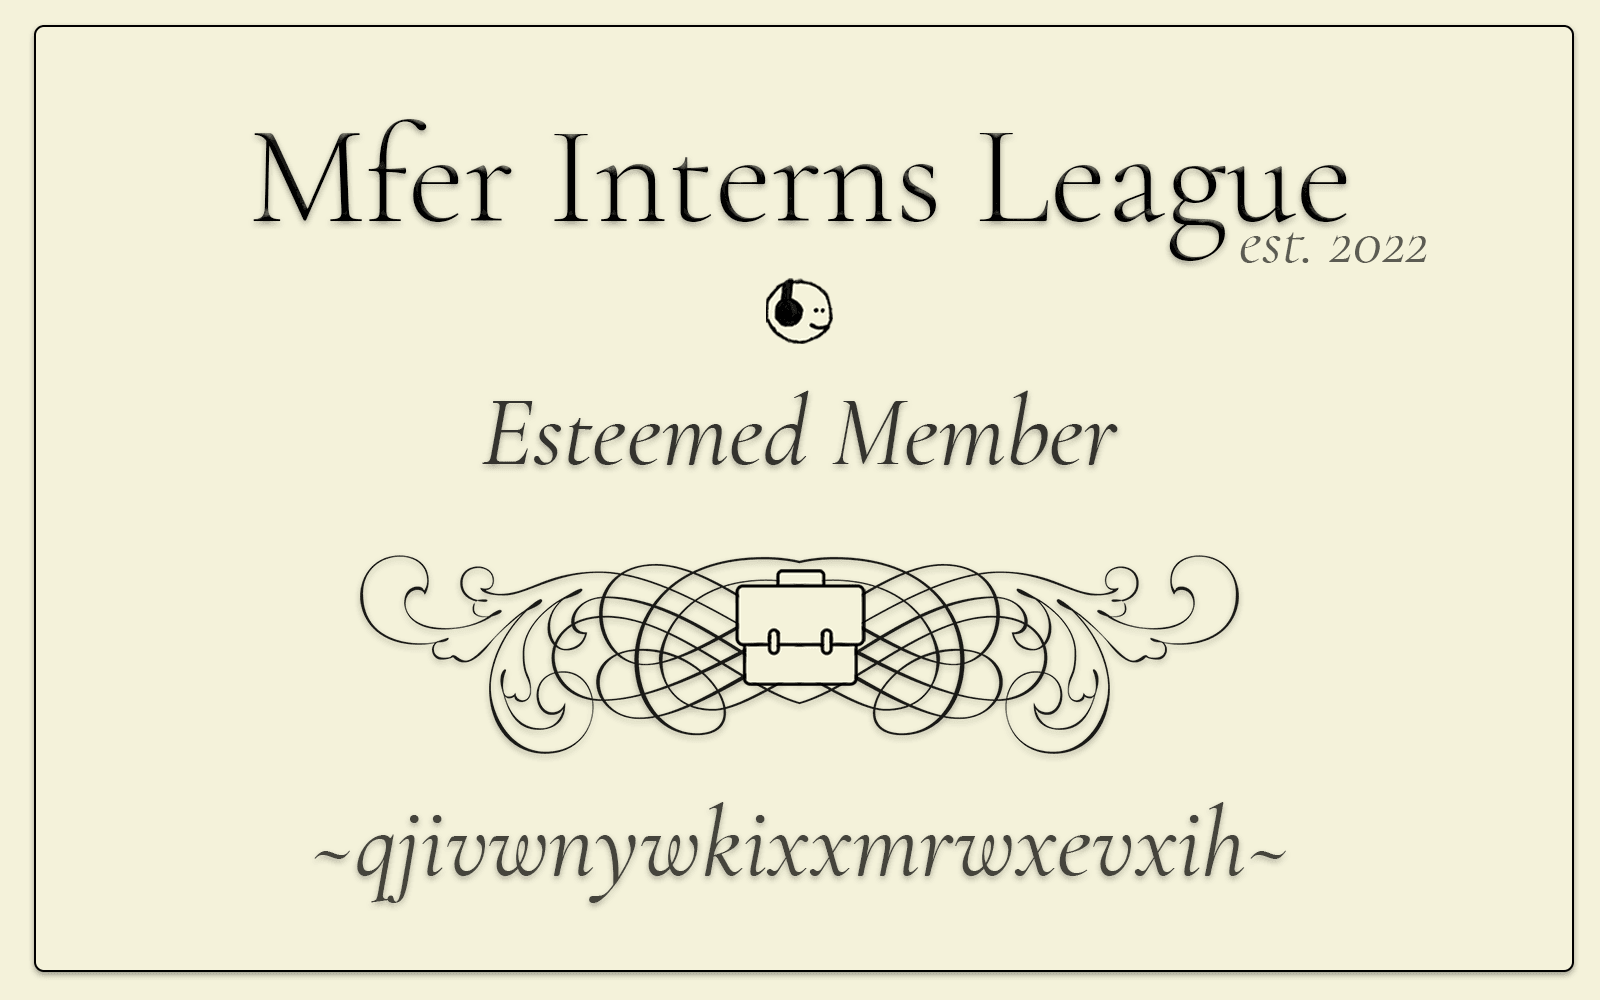 Mfer Interns League Membership